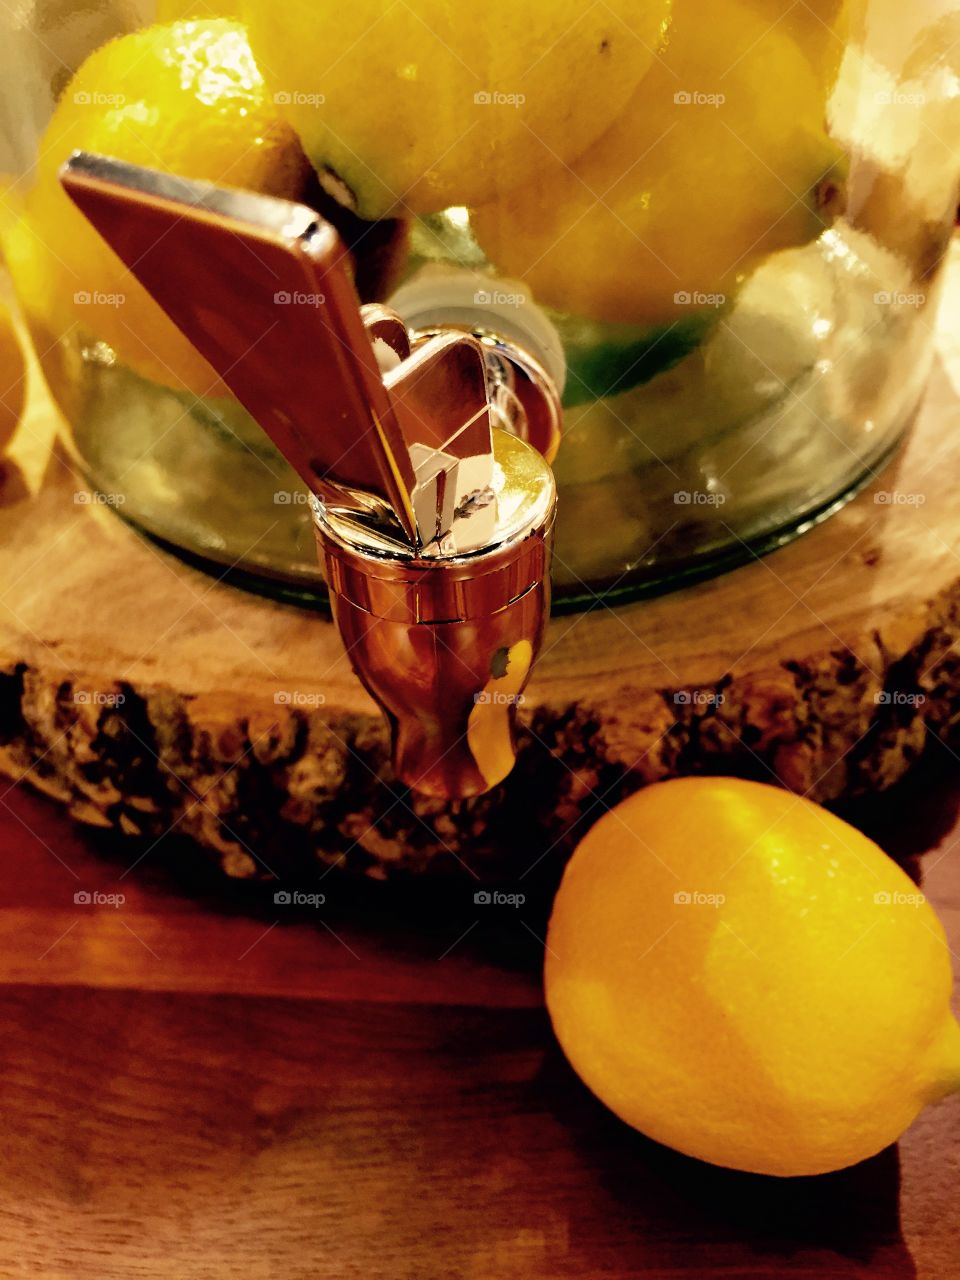 Lemon Spout. A glass pitcher filled with lemons.